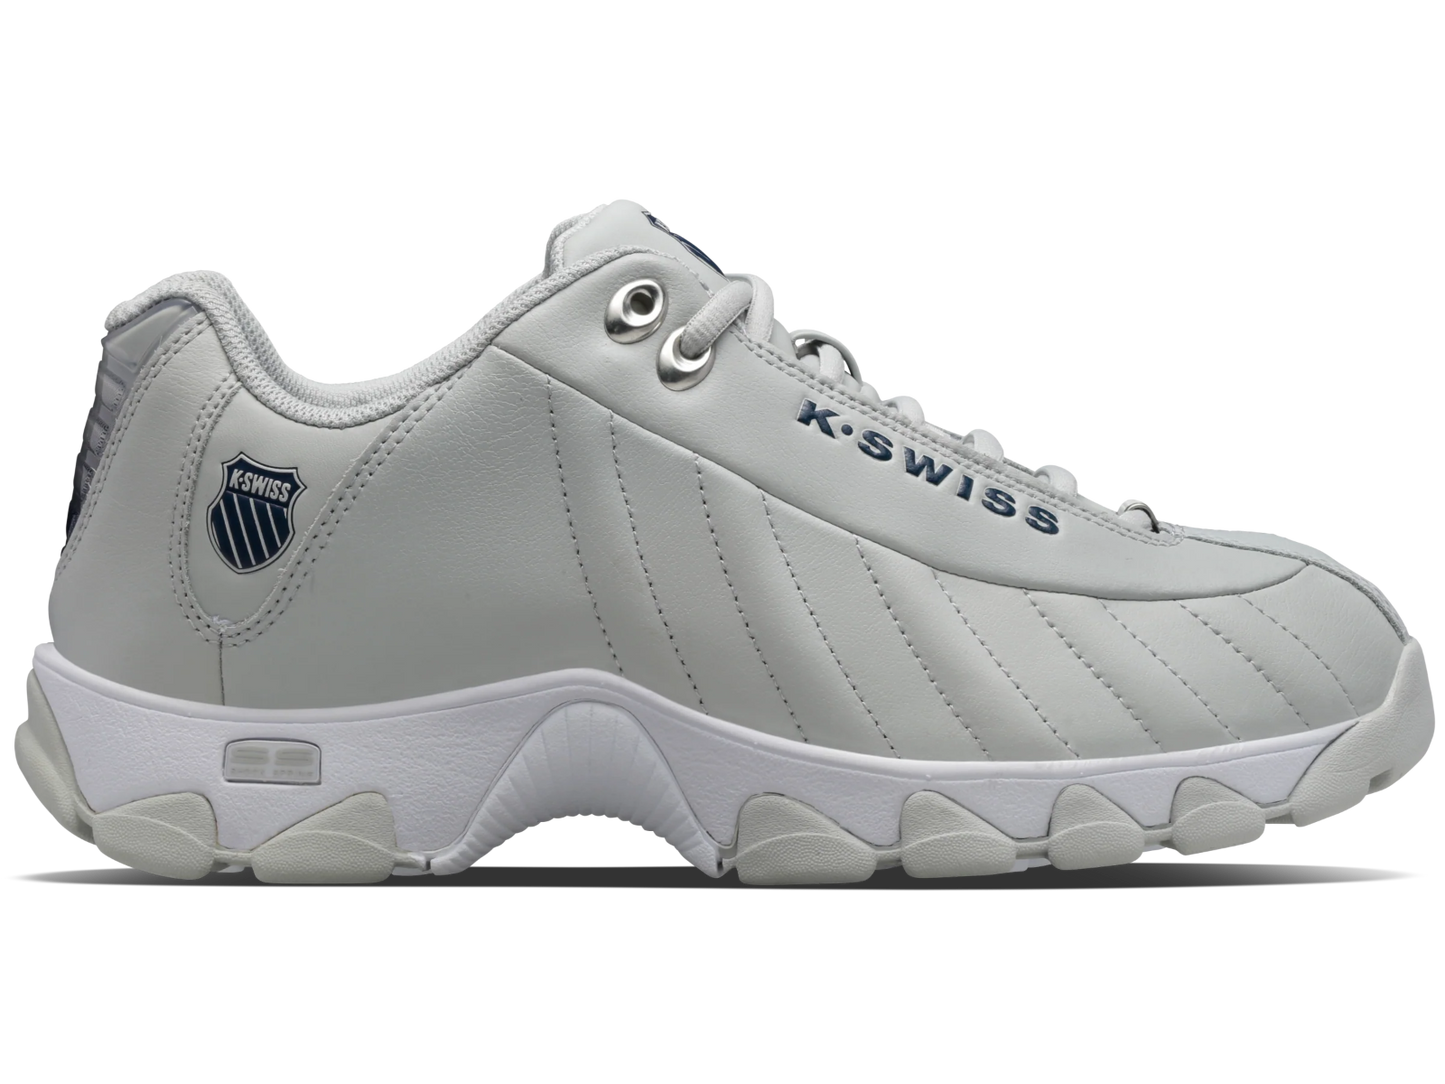 K-Swiss Men's ST329 Medium Low Top Shoe Gray Violet/Navy/White/Gel 06408-029-M